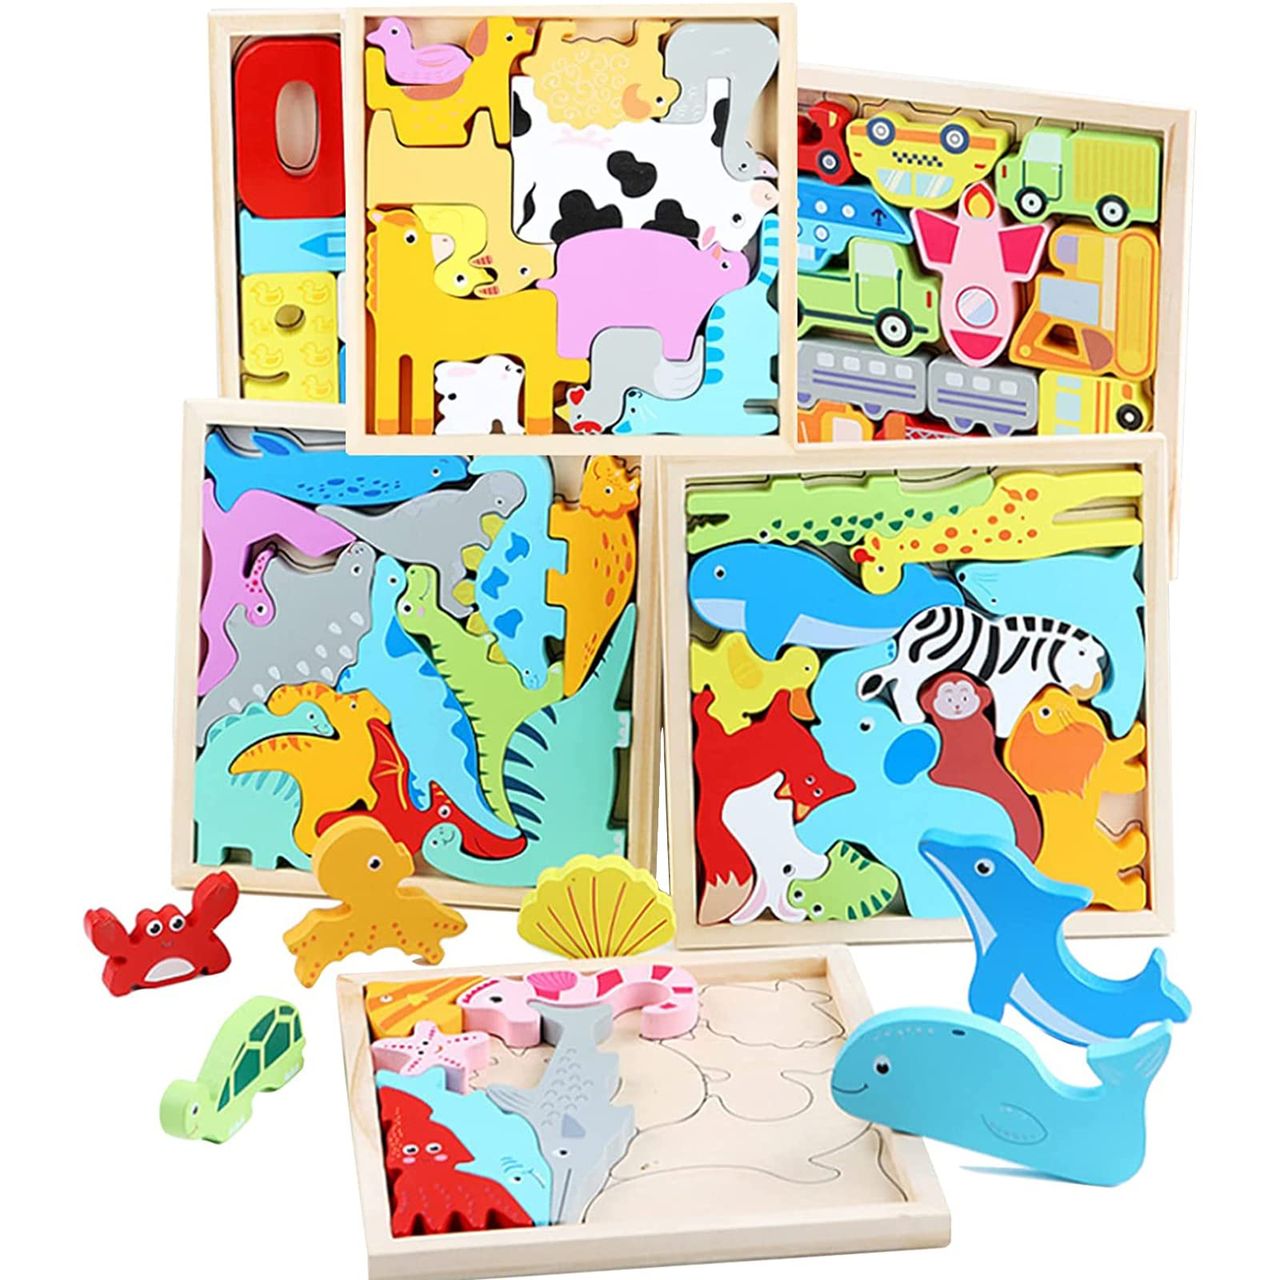 OTONOPI 木製パズル 型はめパズル 形合わせ 木製おもちゃ 6種類 知育玩具 子供用 脳トレ モンテッソーリ教育法 バランスゲーム 動物 恐竜 乗り物 数字 クリスマス プレゼント 6板セット 6歳以上